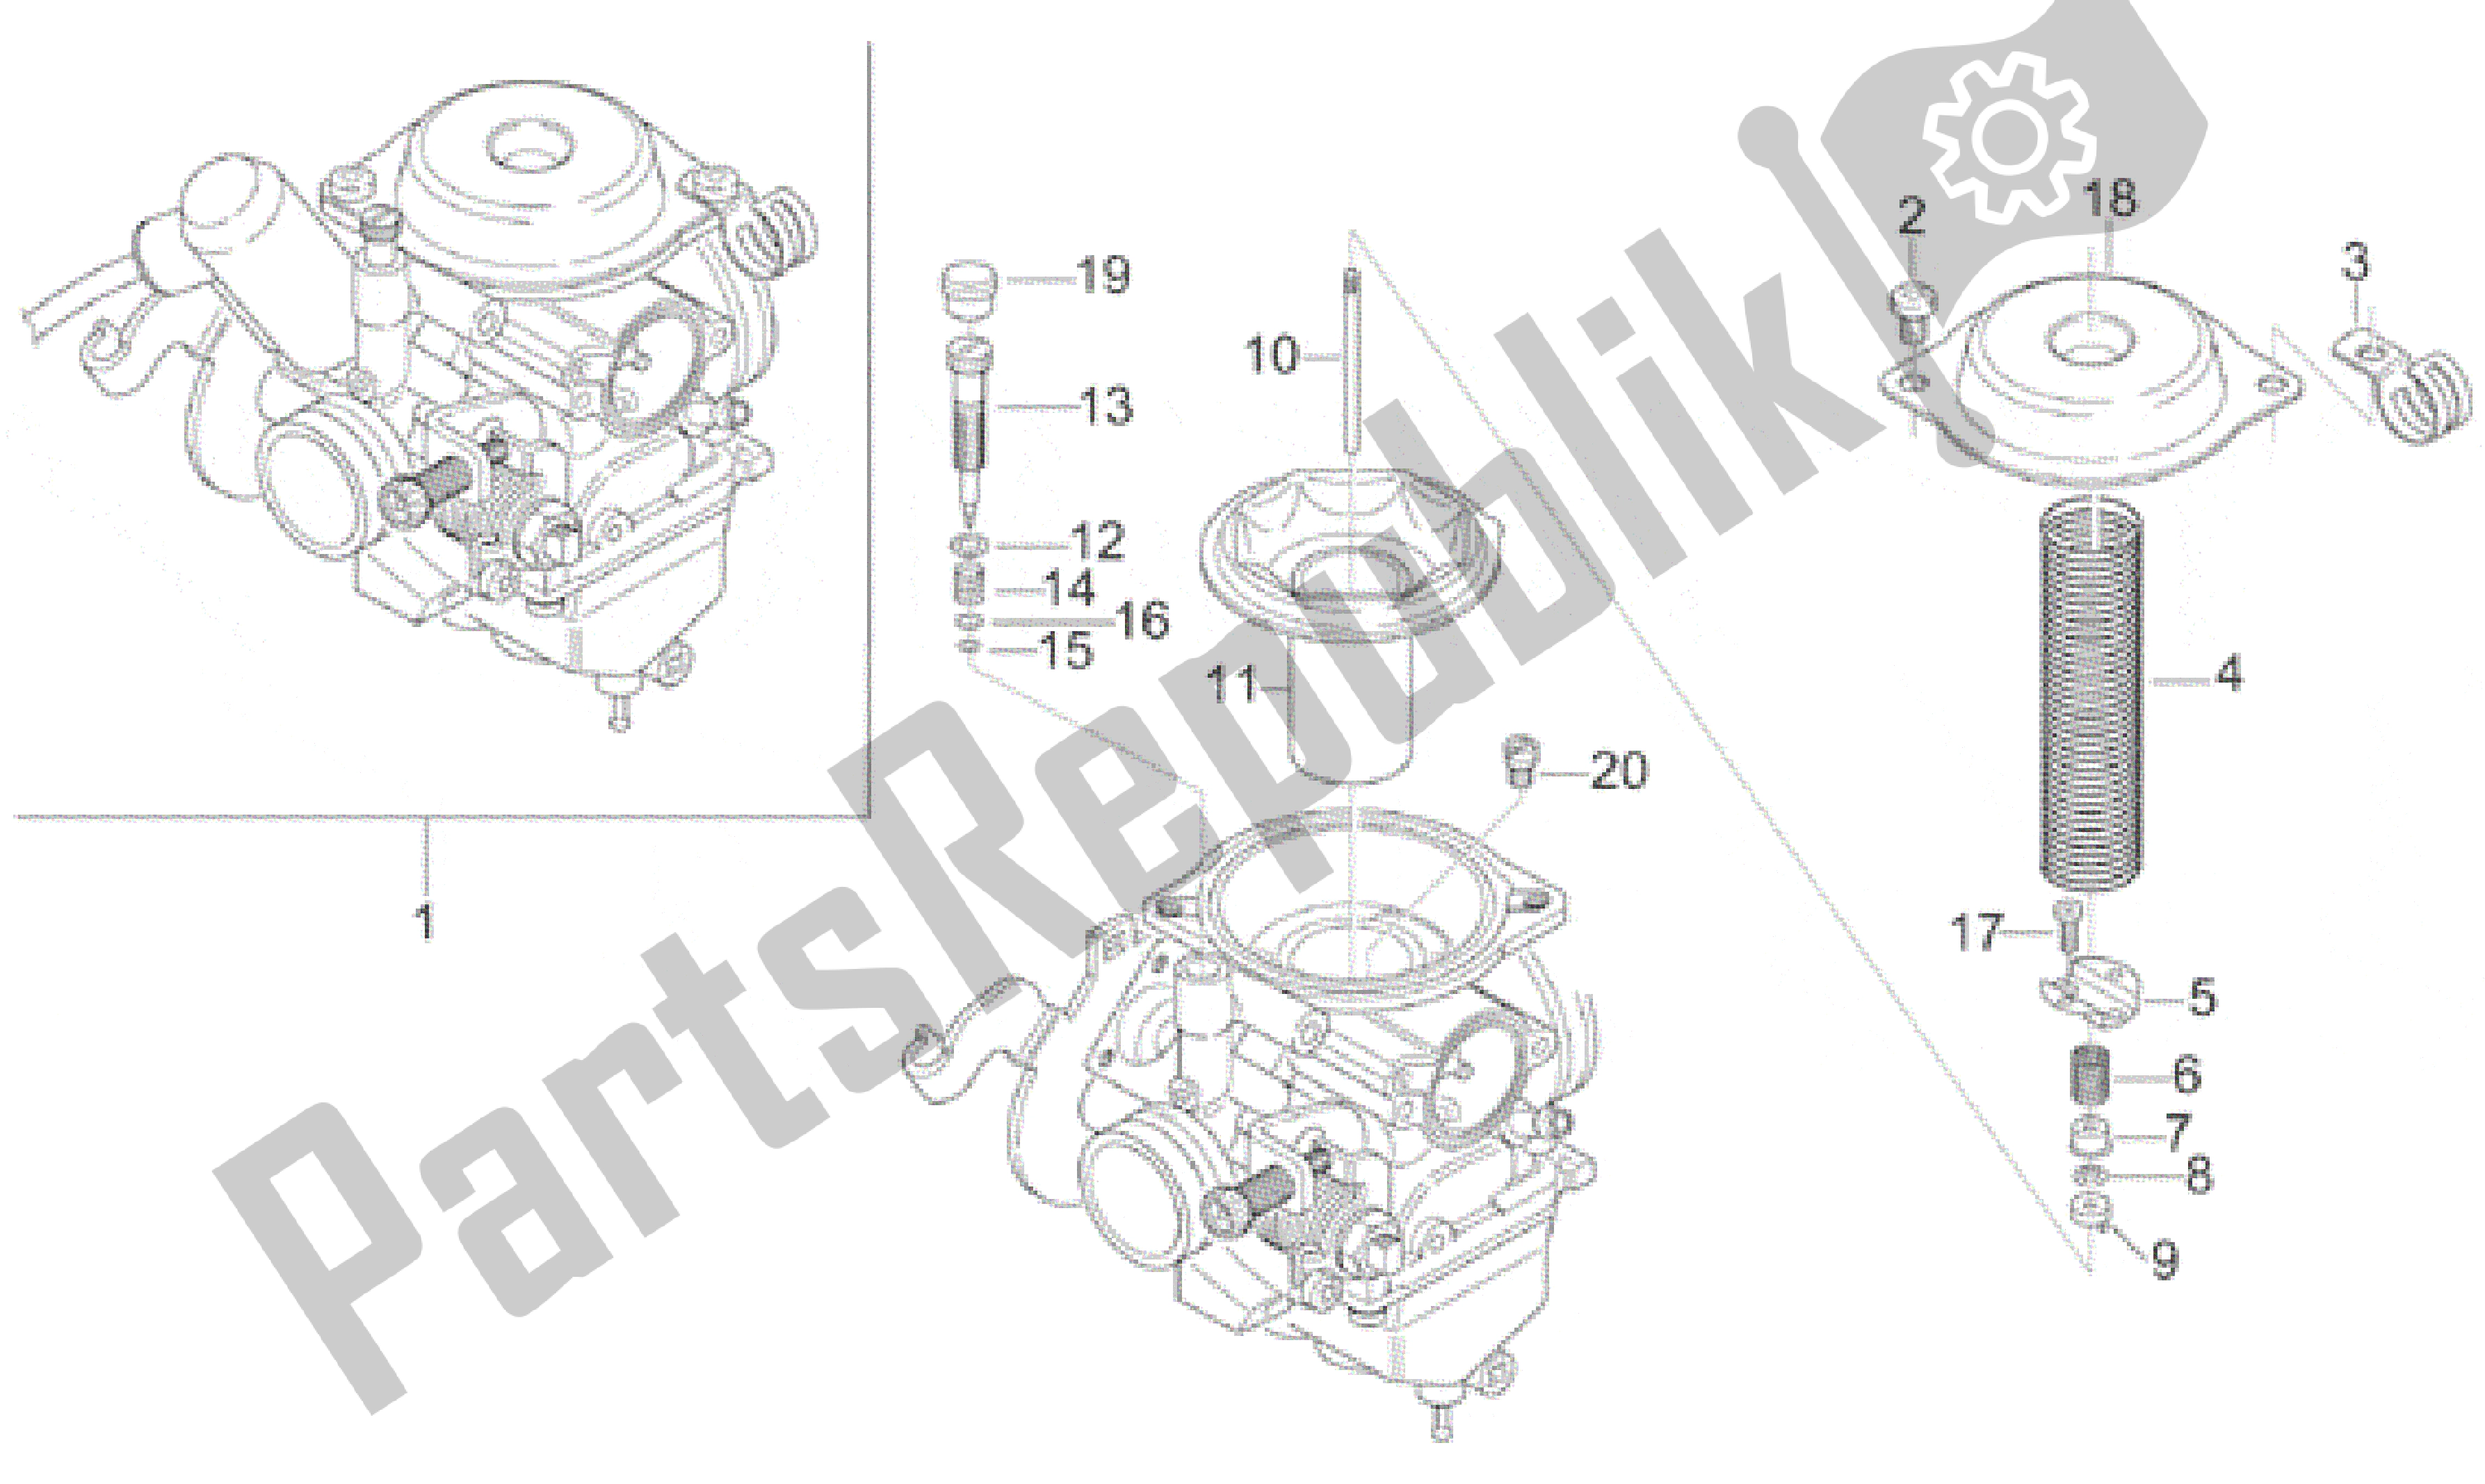 All parts for the Carburettor I of the Aprilia Leonardo 125 1996 - 1998